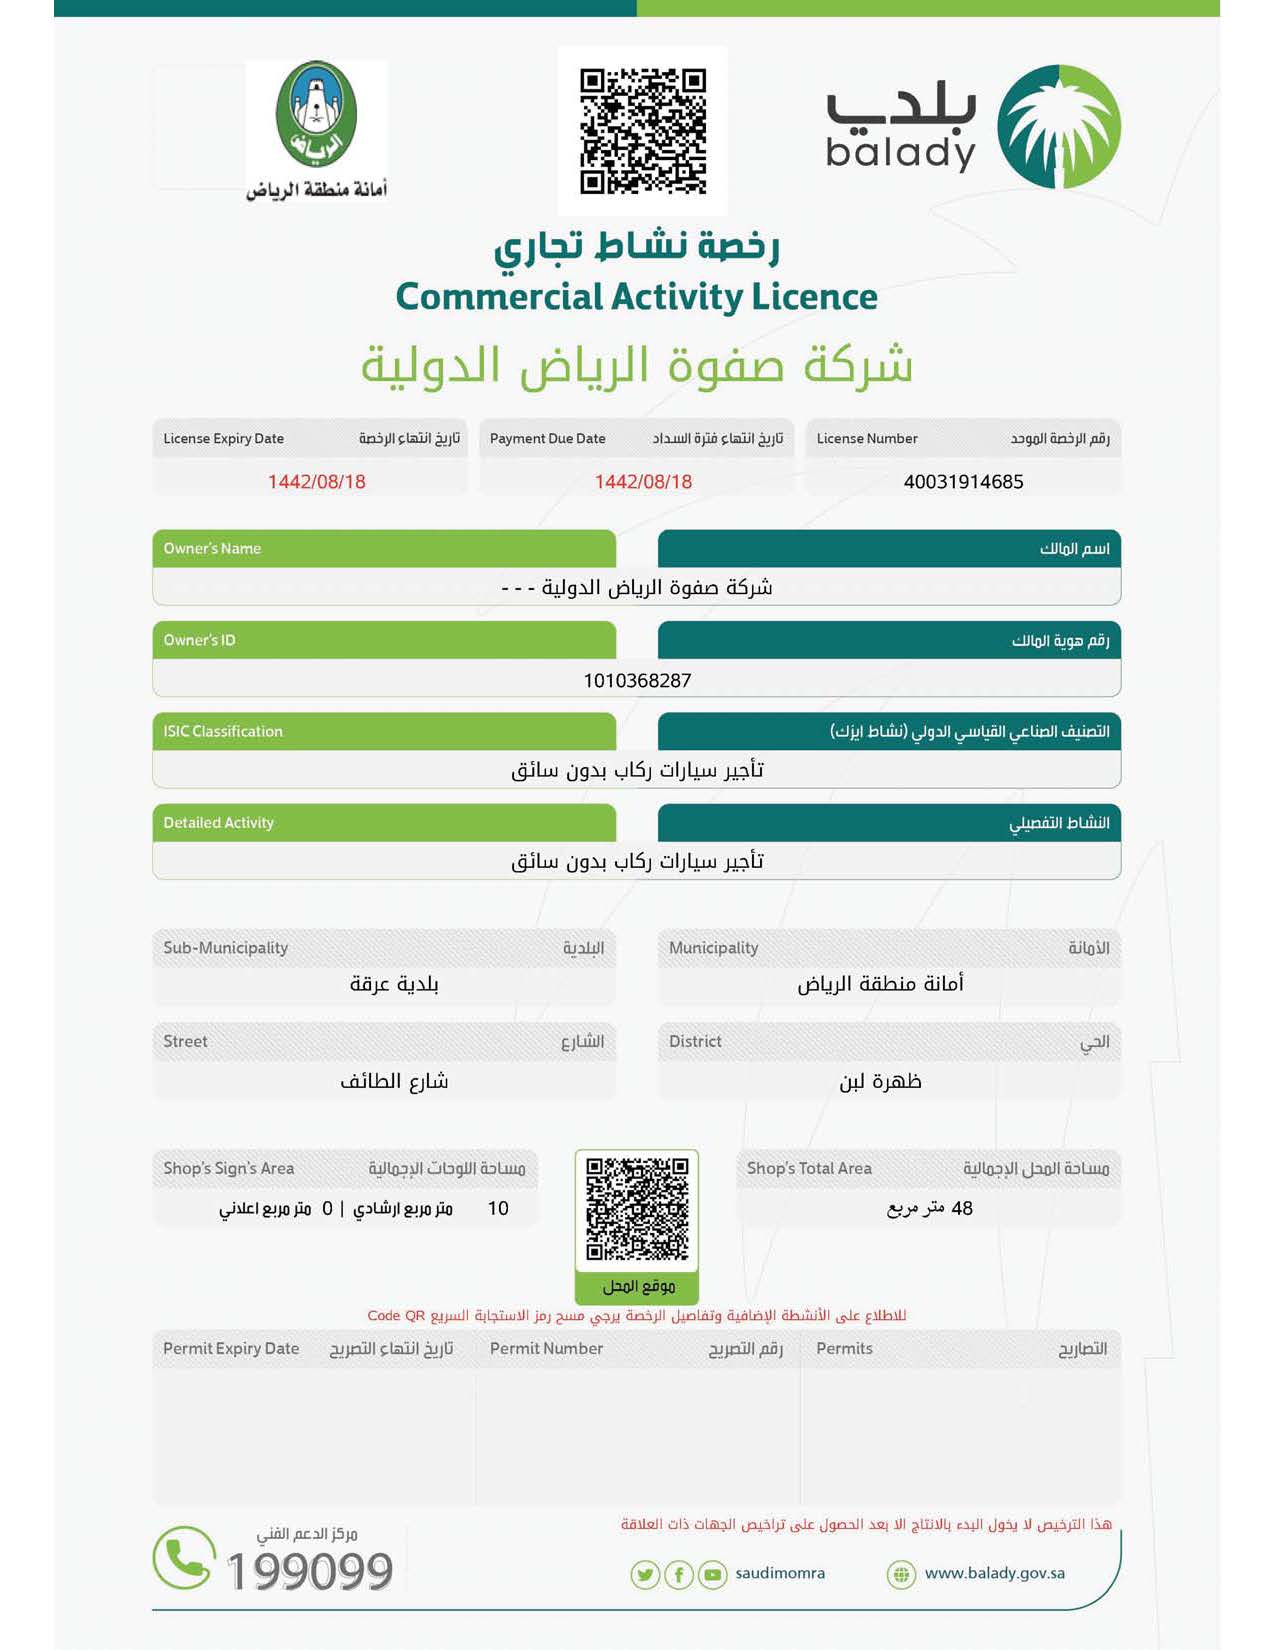 البلديات Page 15 One of the leading companies and a significant number in all its fields